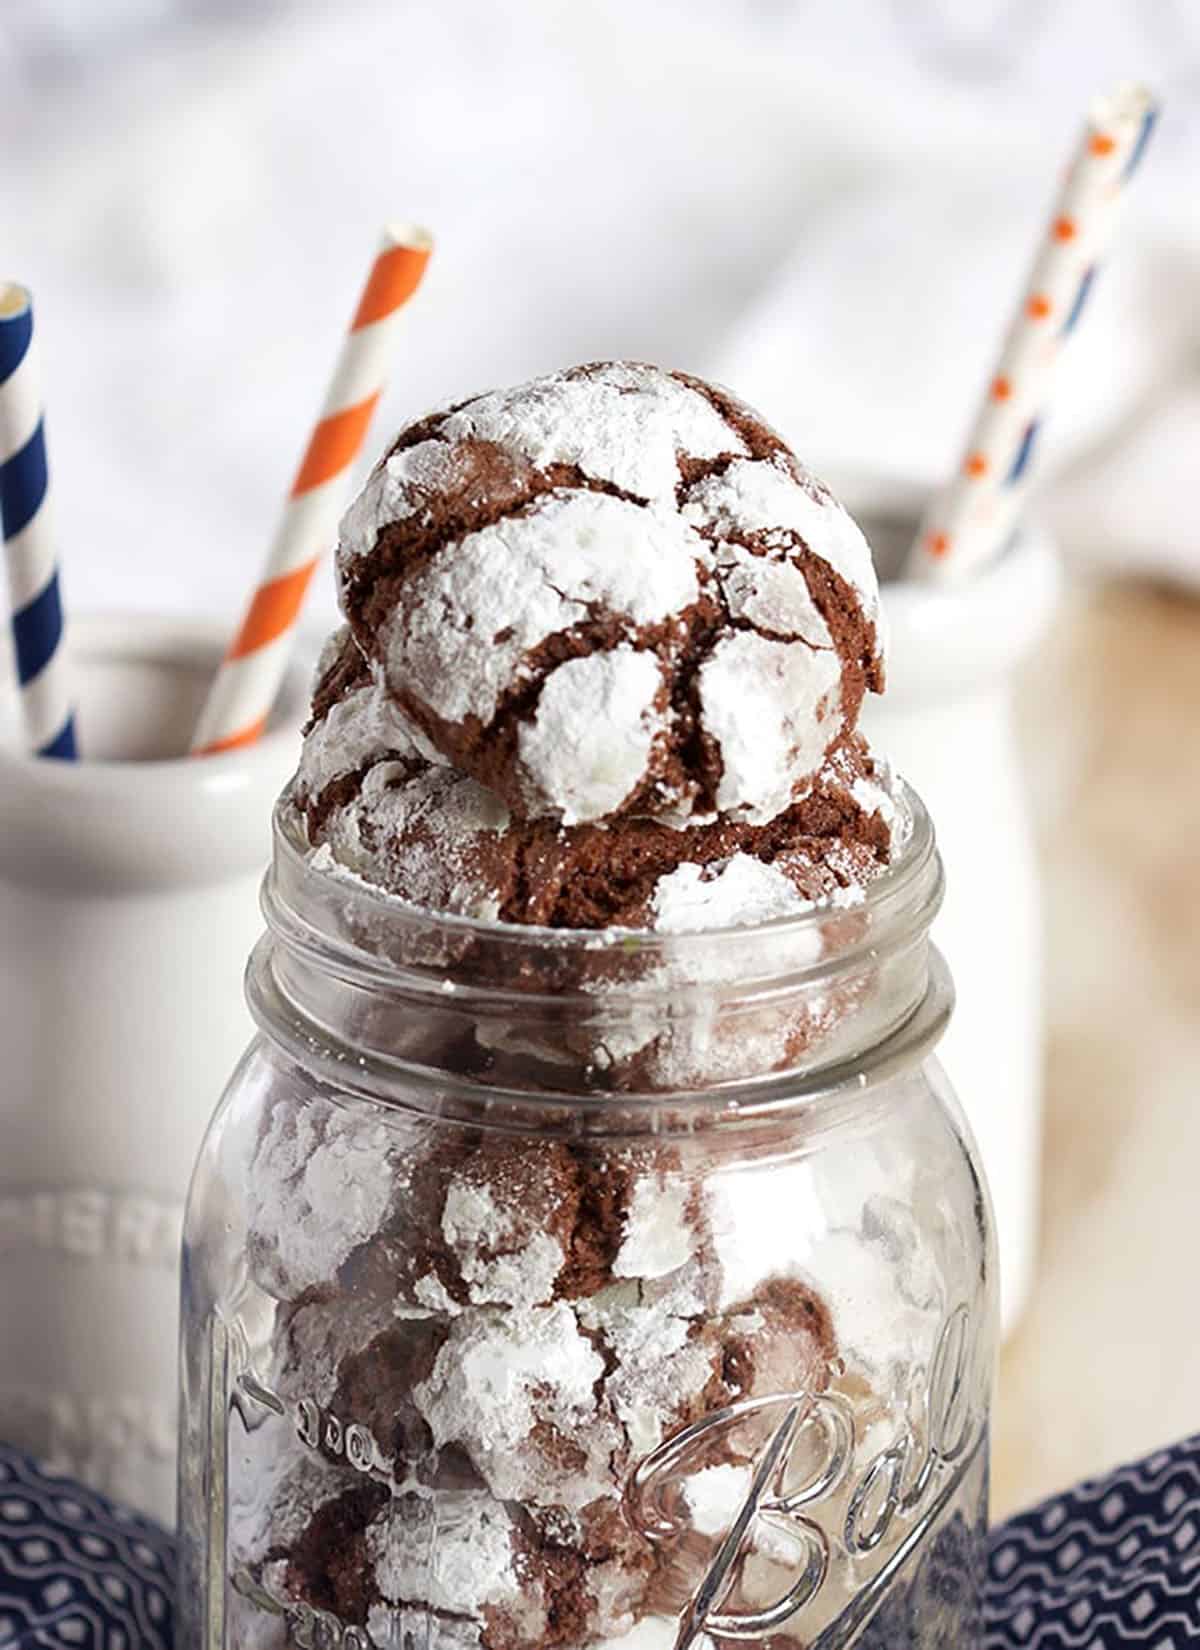 chocolate crinkle cookie on top of as stack of cookies in a jar.